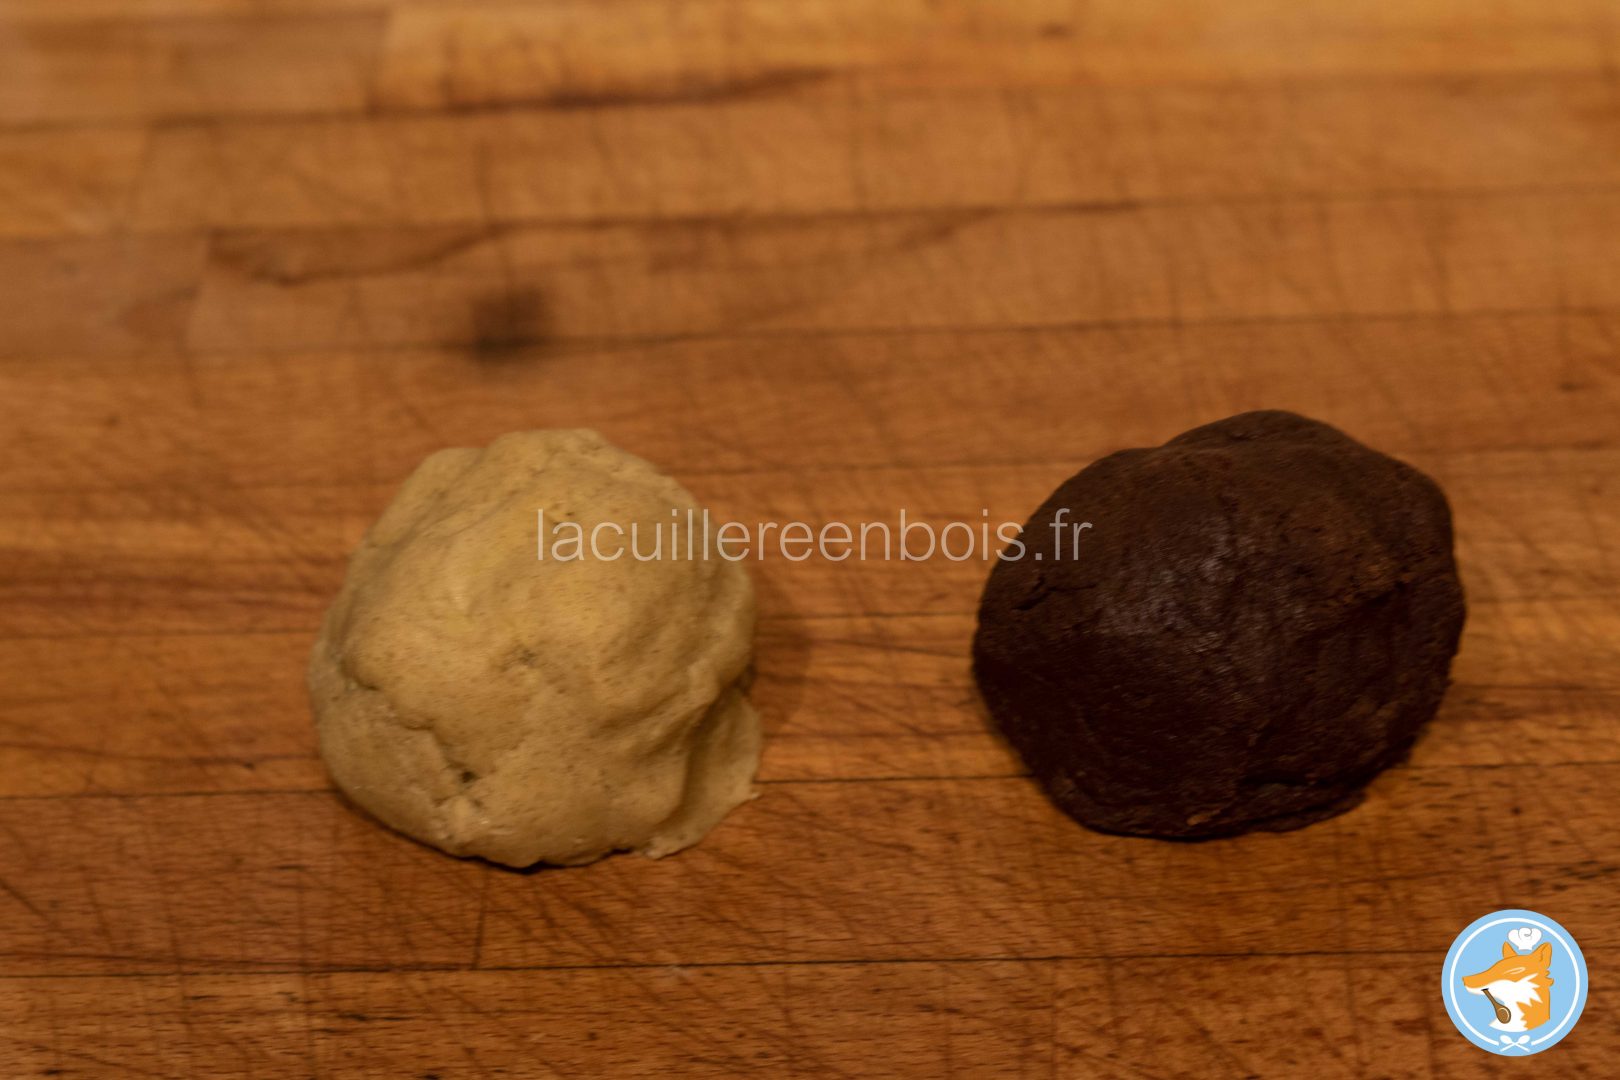 lacuillereenbois.fr_palets_bretons_marbré_cacao_sarasin_gourmand_croquant_fondant